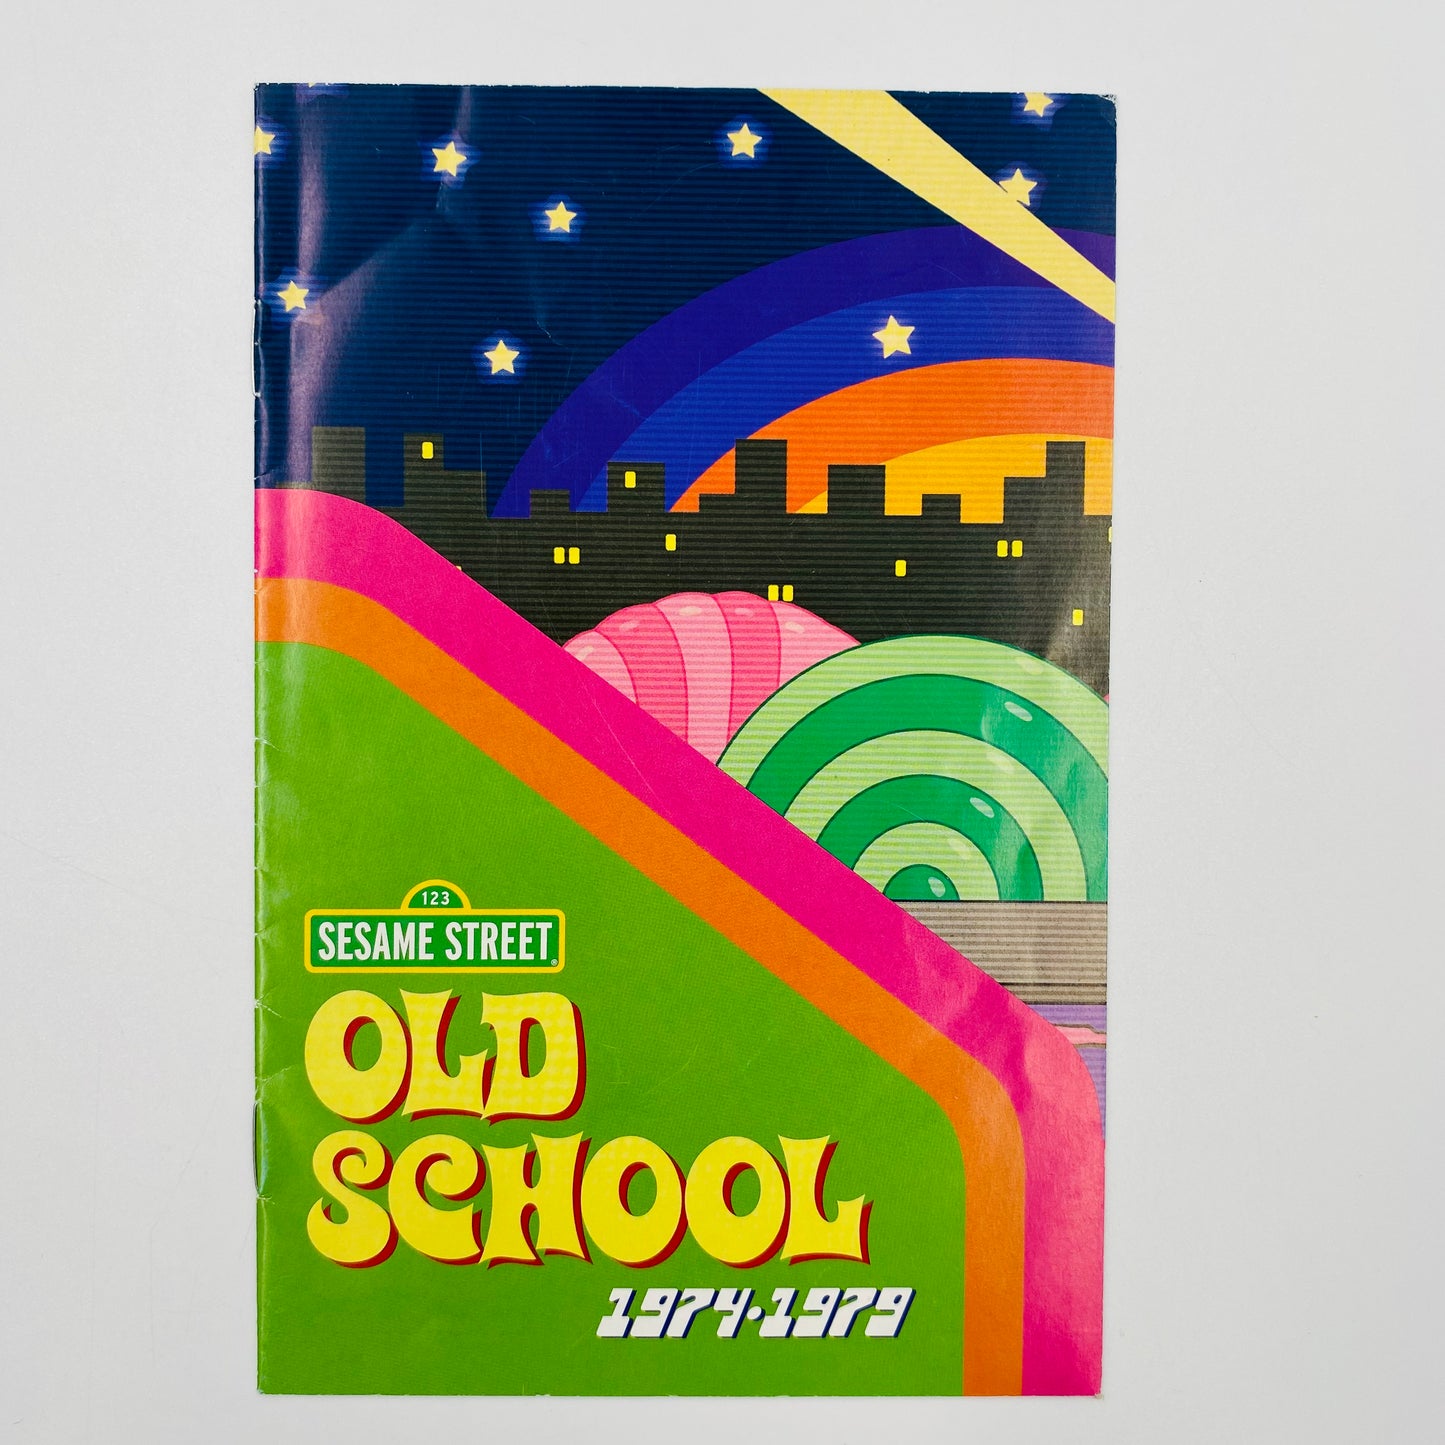 Sesame Street: Old School Volume 2 1974-1979 DVD (2007) Genius Entertainment